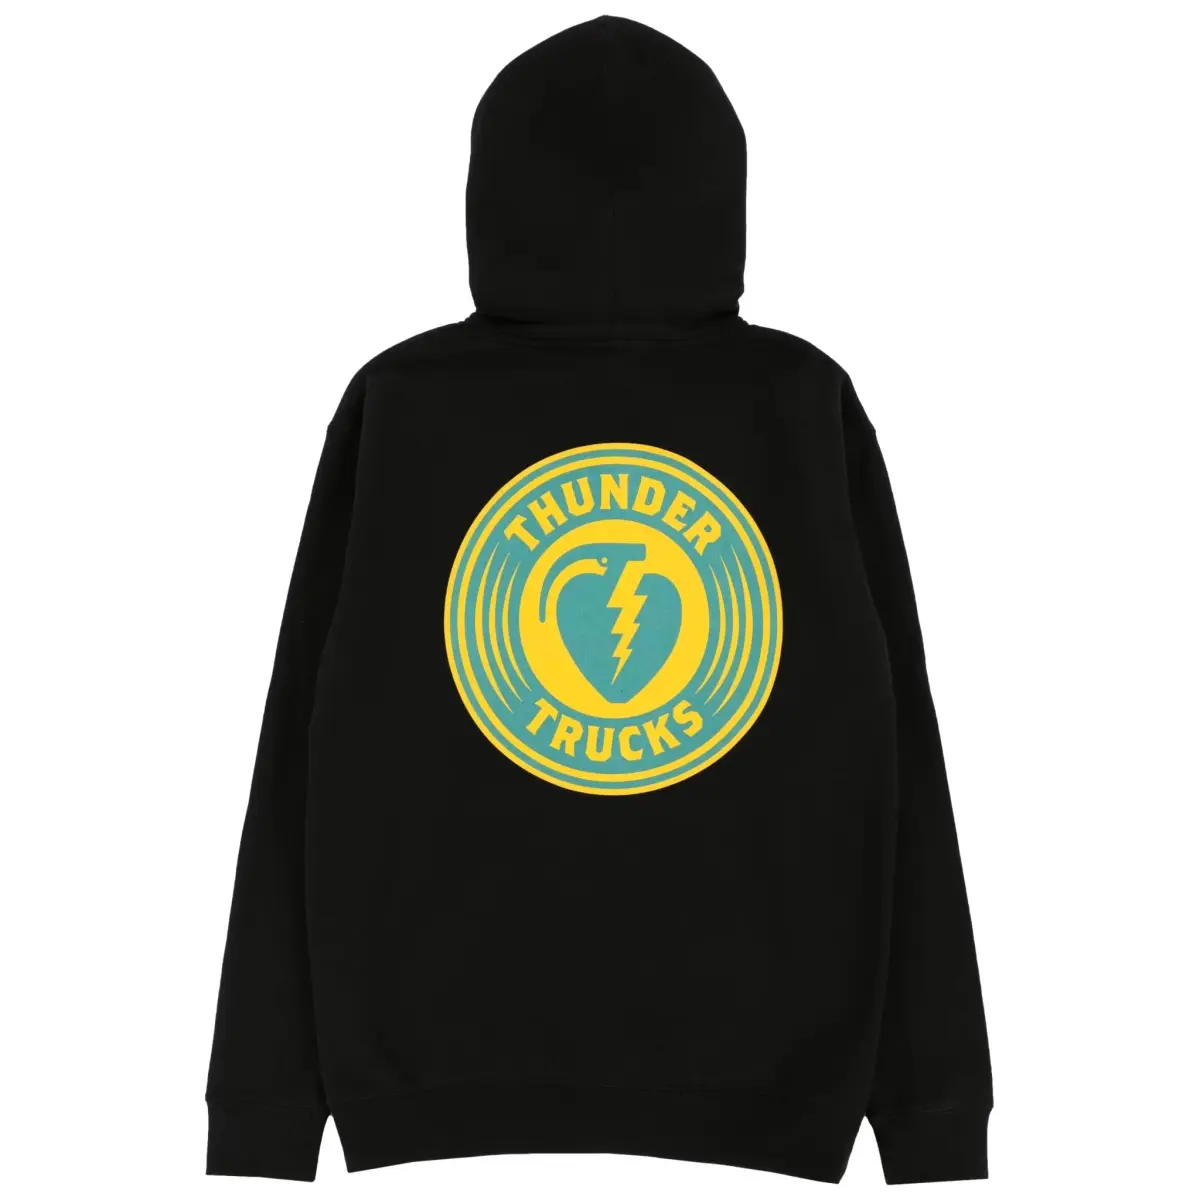 Thunder zip hoodie logo black